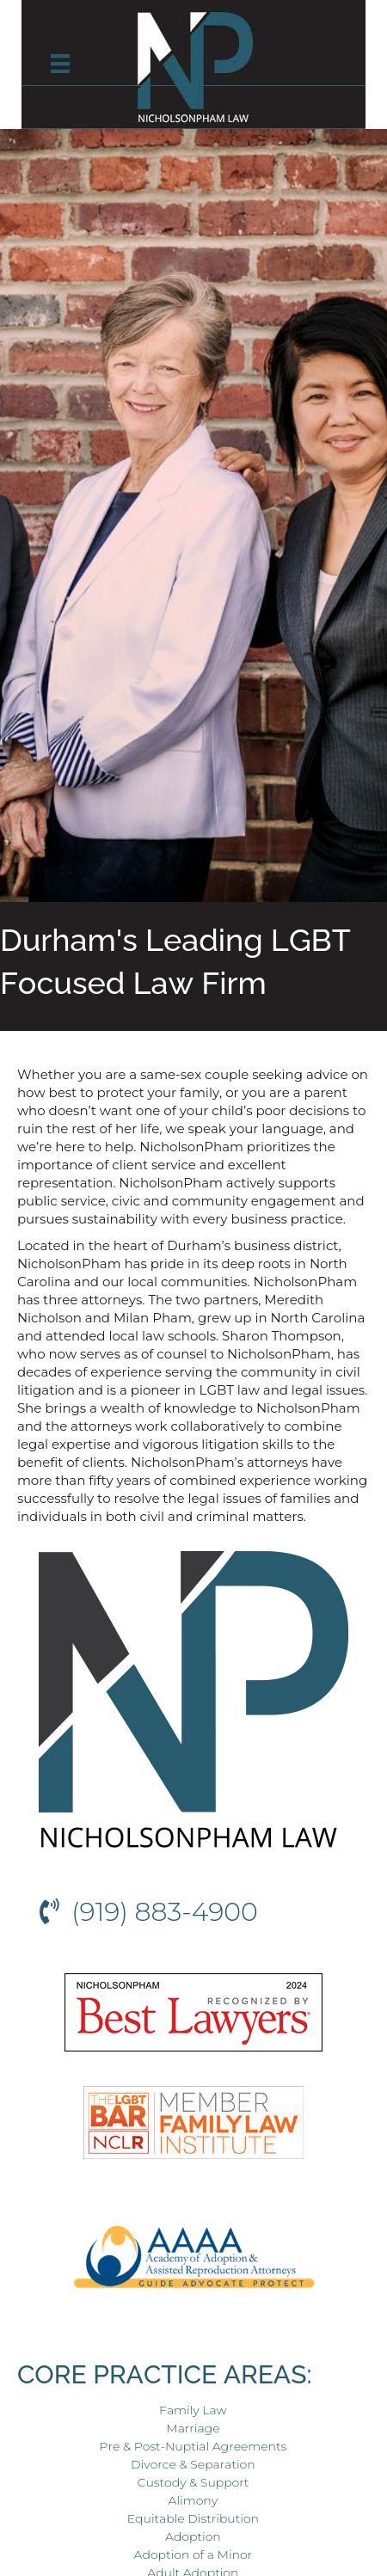 NicholsonPham | Attorneys at Law - Durham NC Lawyers